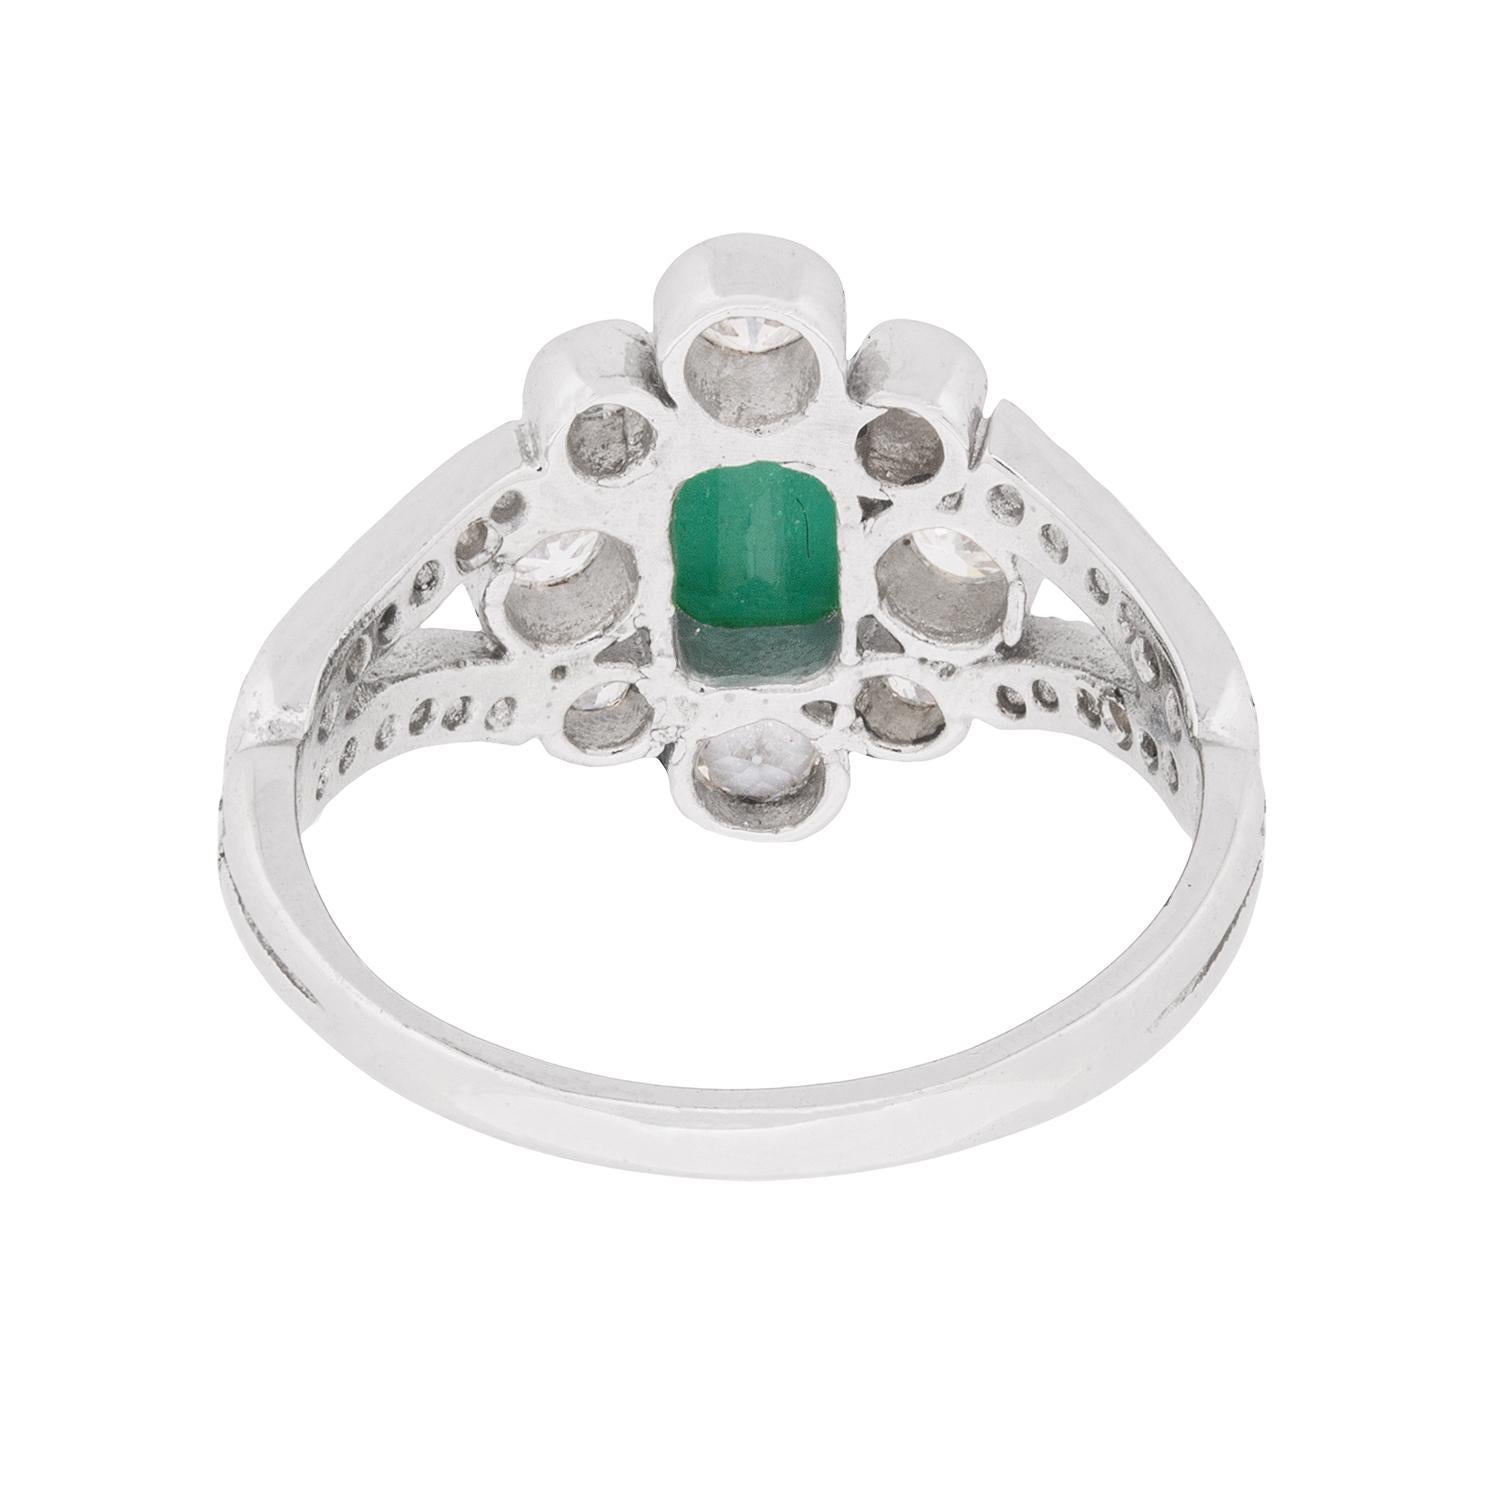 Women's or Men's Art Deco 0.70 Carat Emerald and Diamond Cluster Ring, circa 1940s